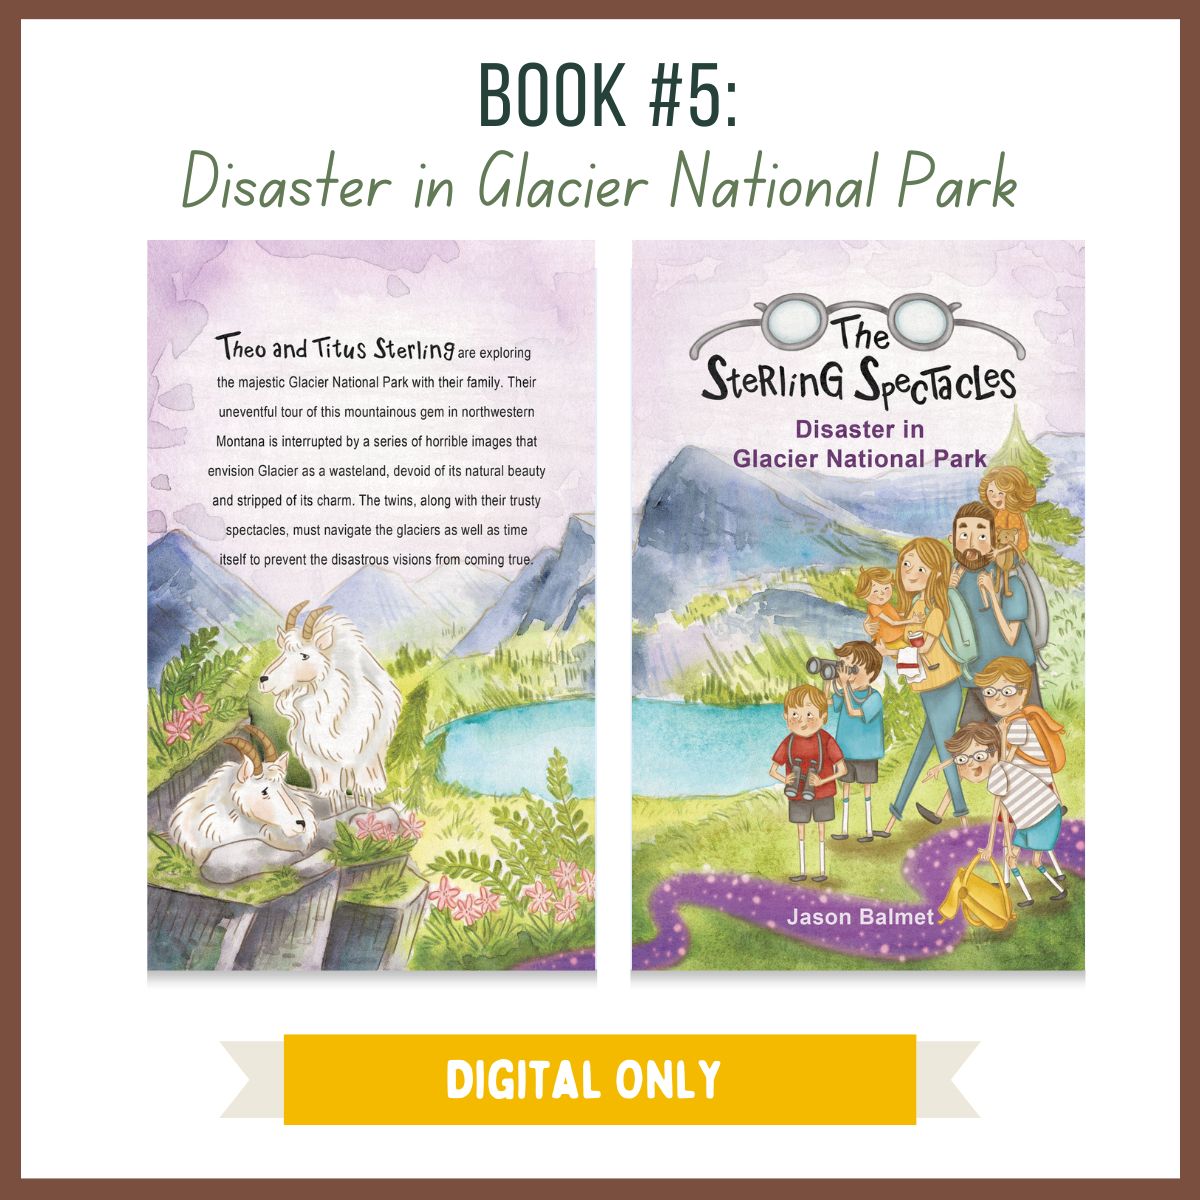 Book #5: Disaster in Glacier National Park - DIGITAL